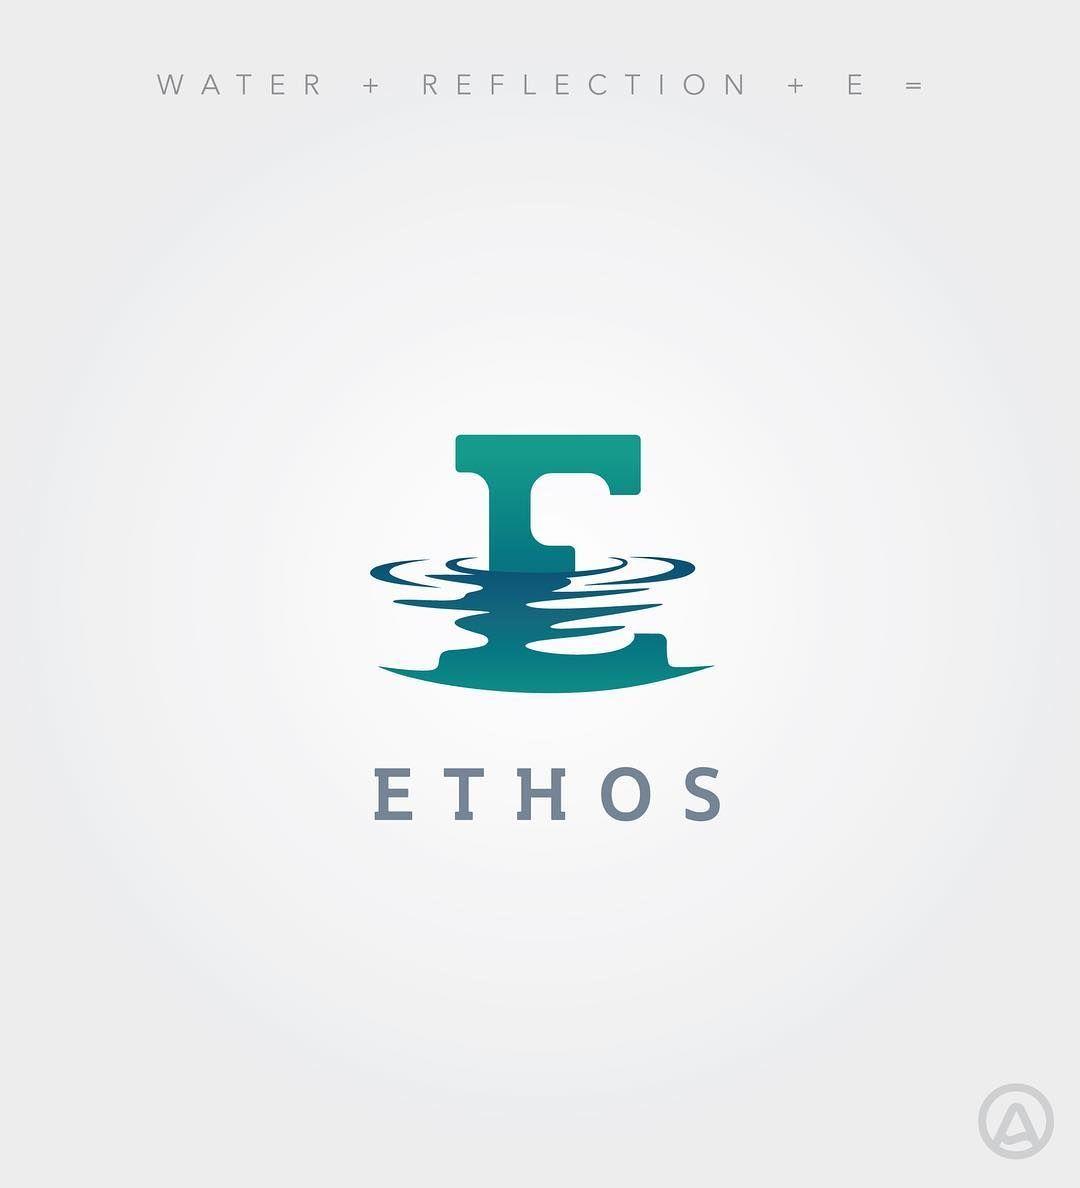 Refection Logo - Ethos logo more organic feel to water reflection. #logo ...